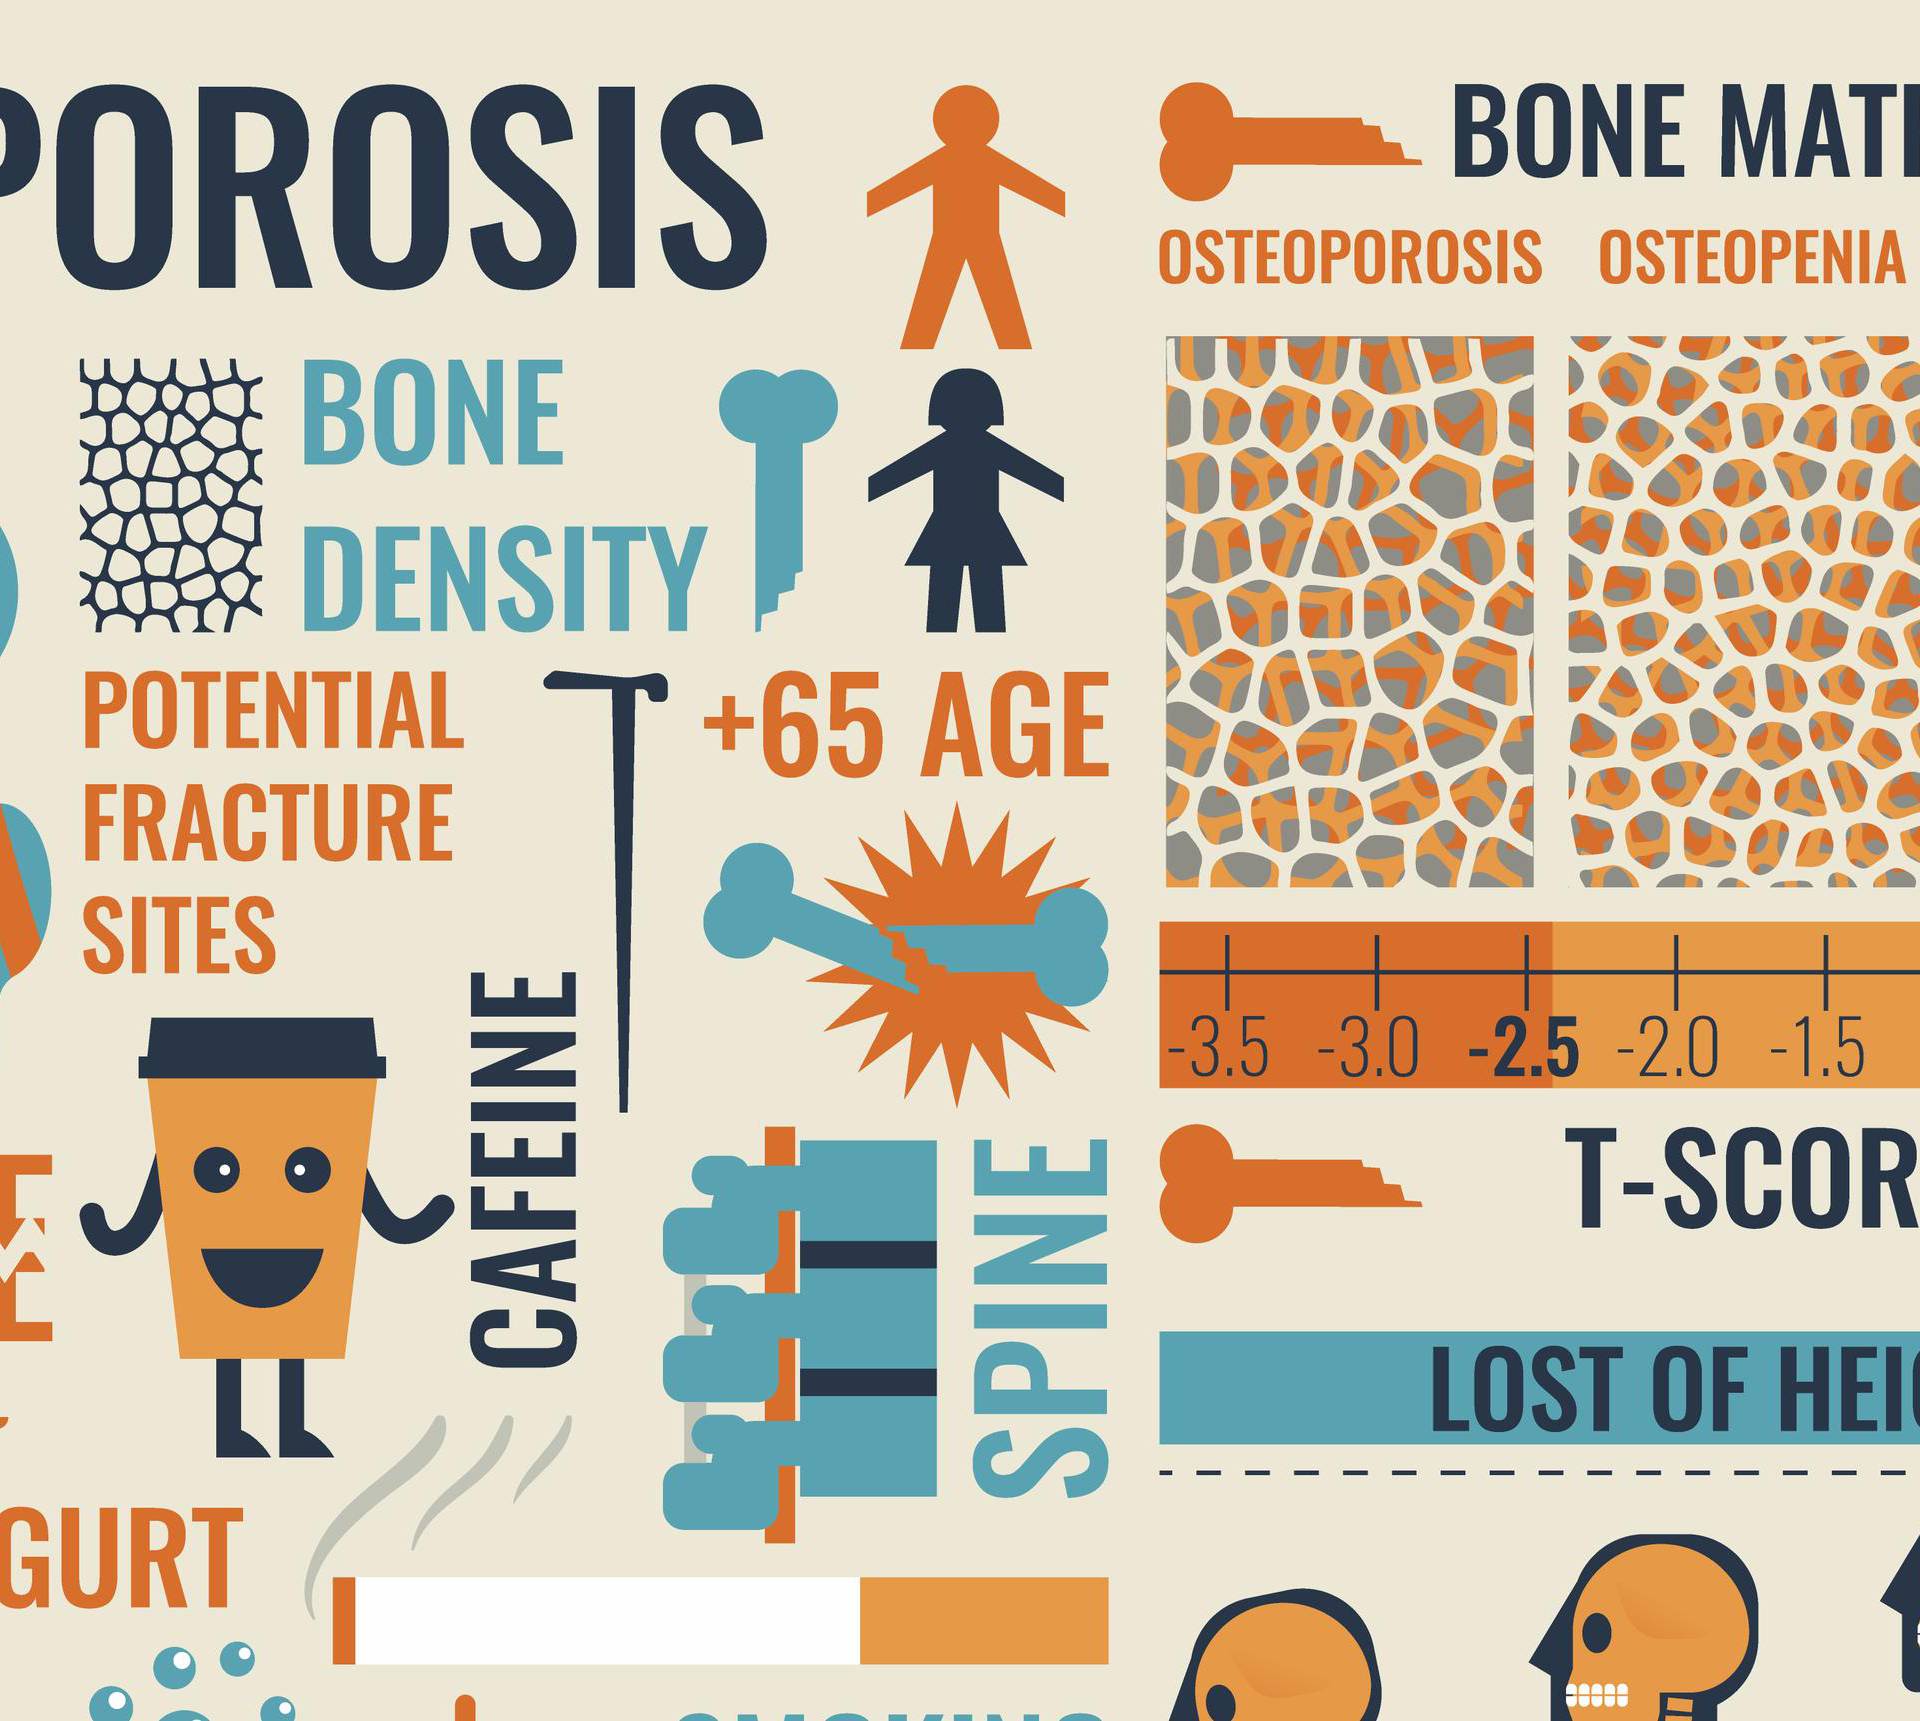 Čuvajte se: Osteoporoza jedna od 10 najčešćih bolesti danas